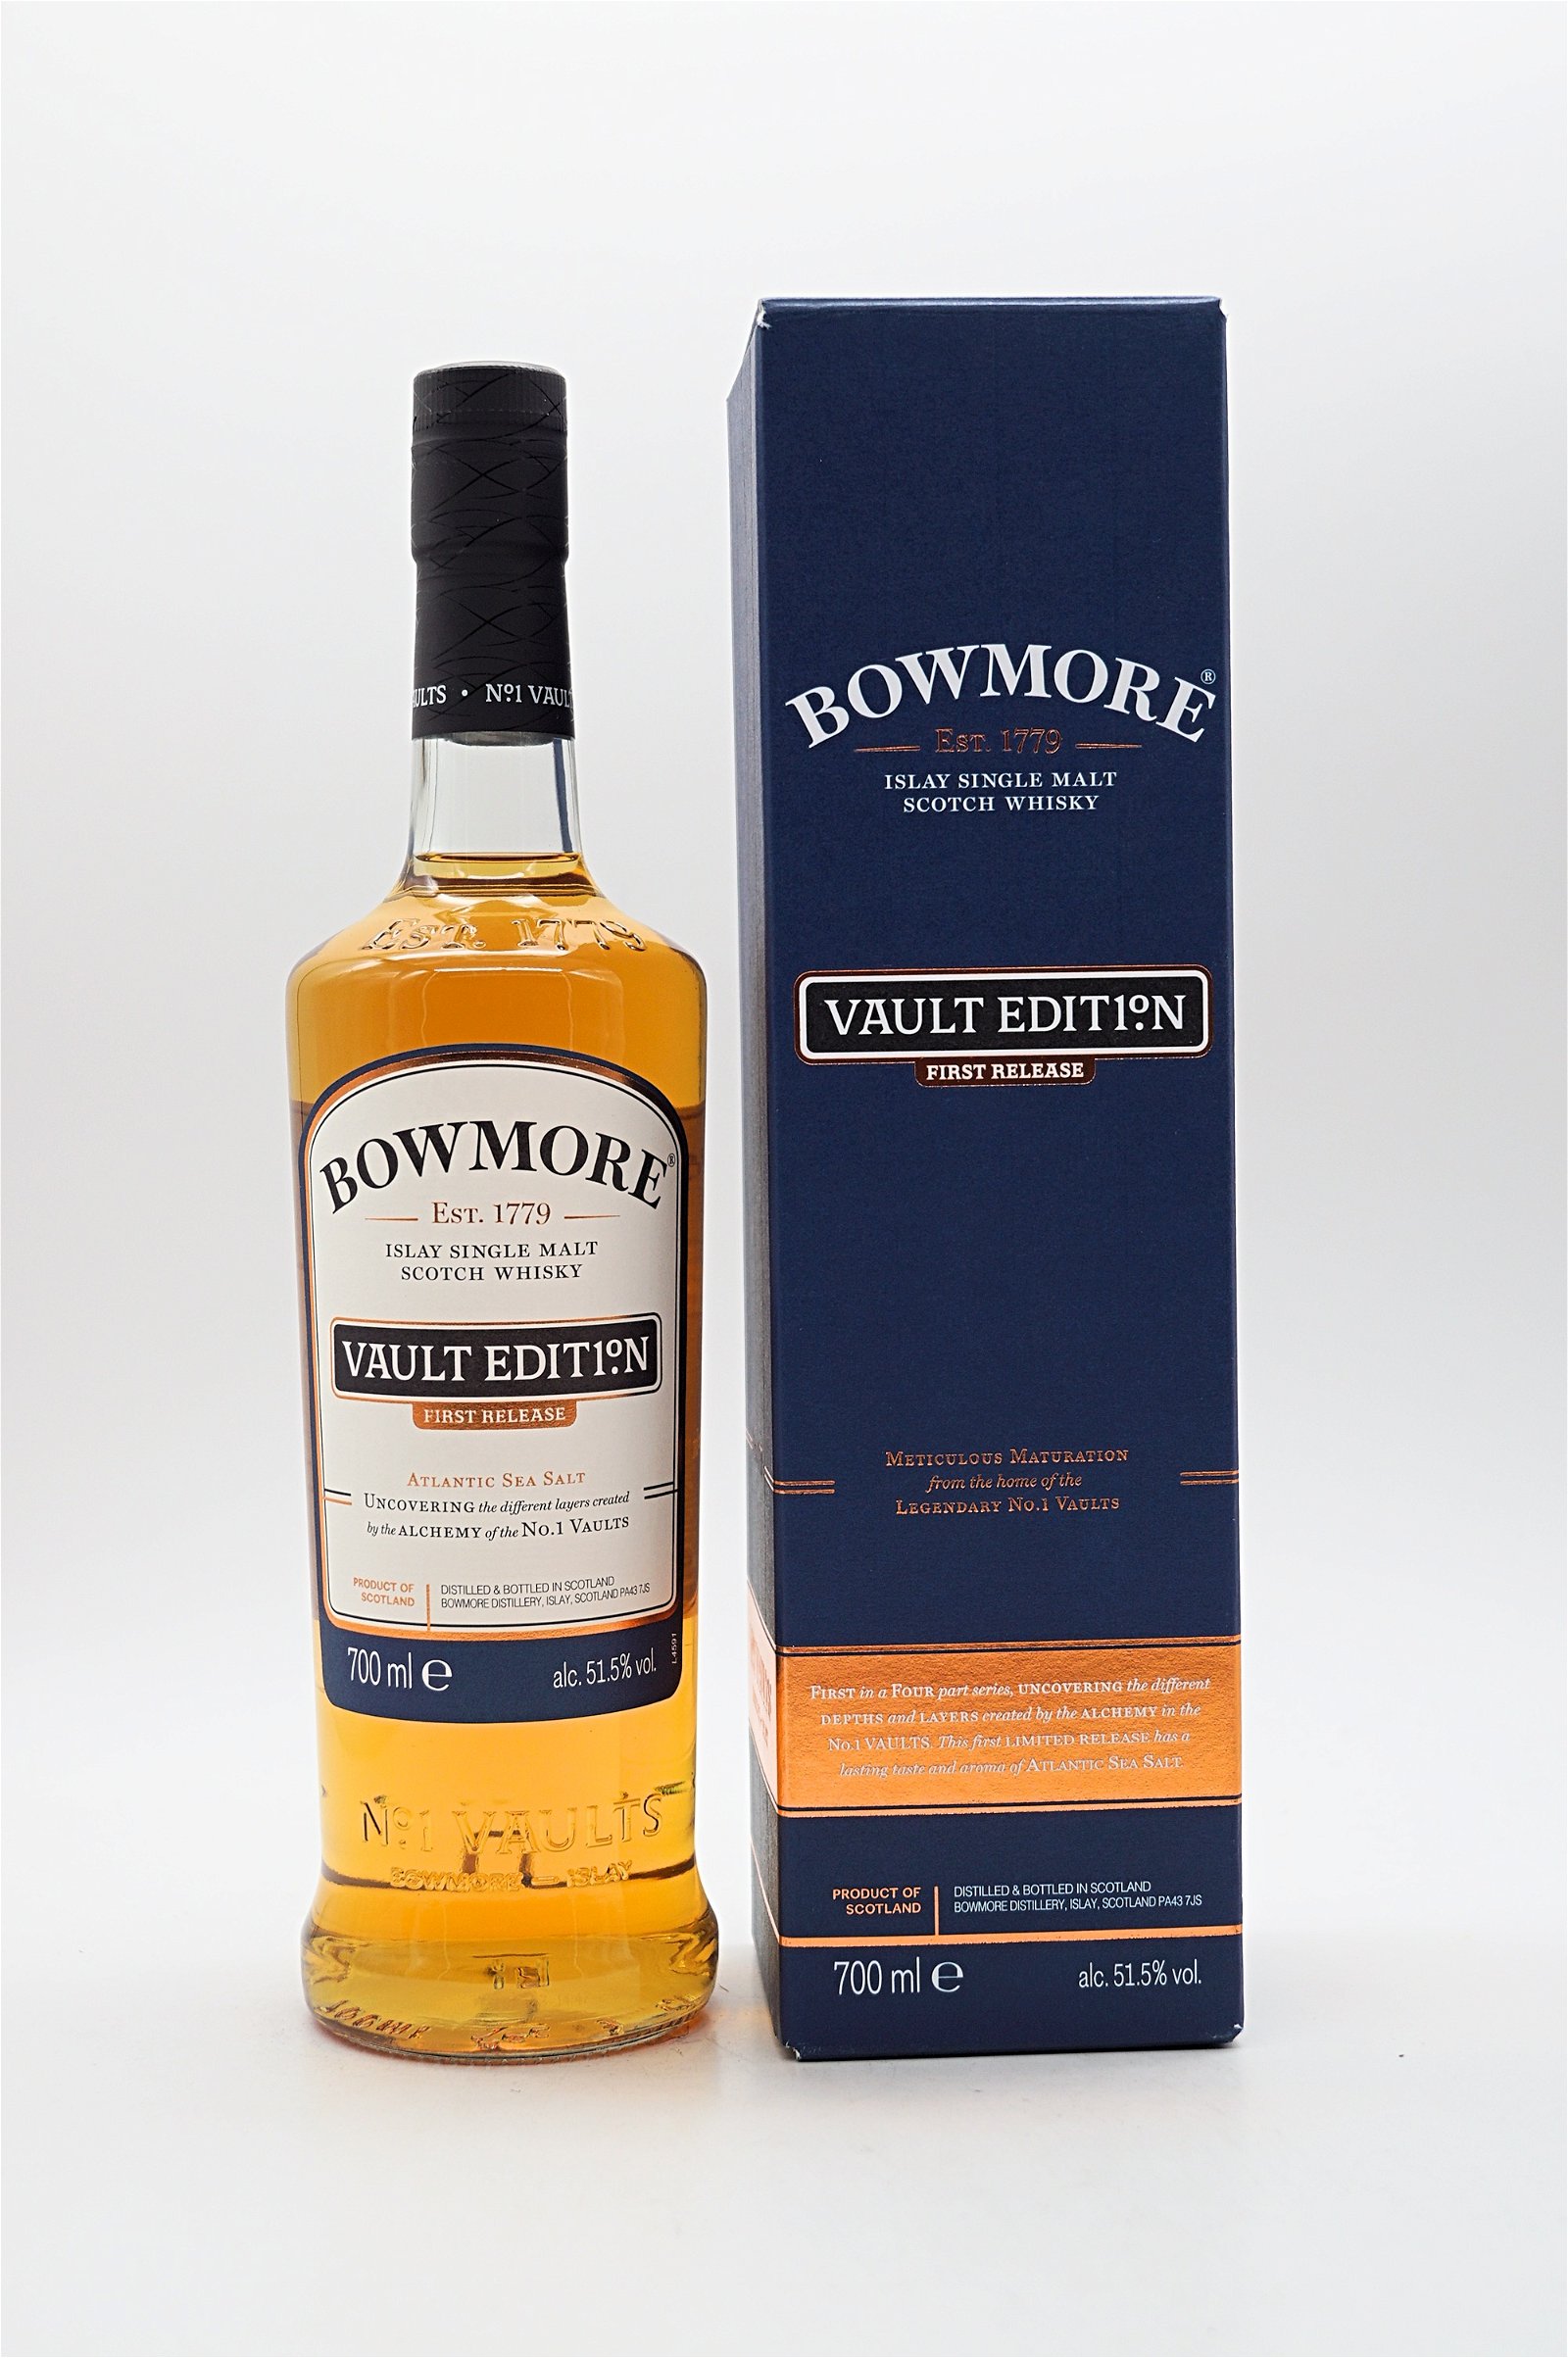 Bowmore Vault Edition First Release Single Malt Scotch